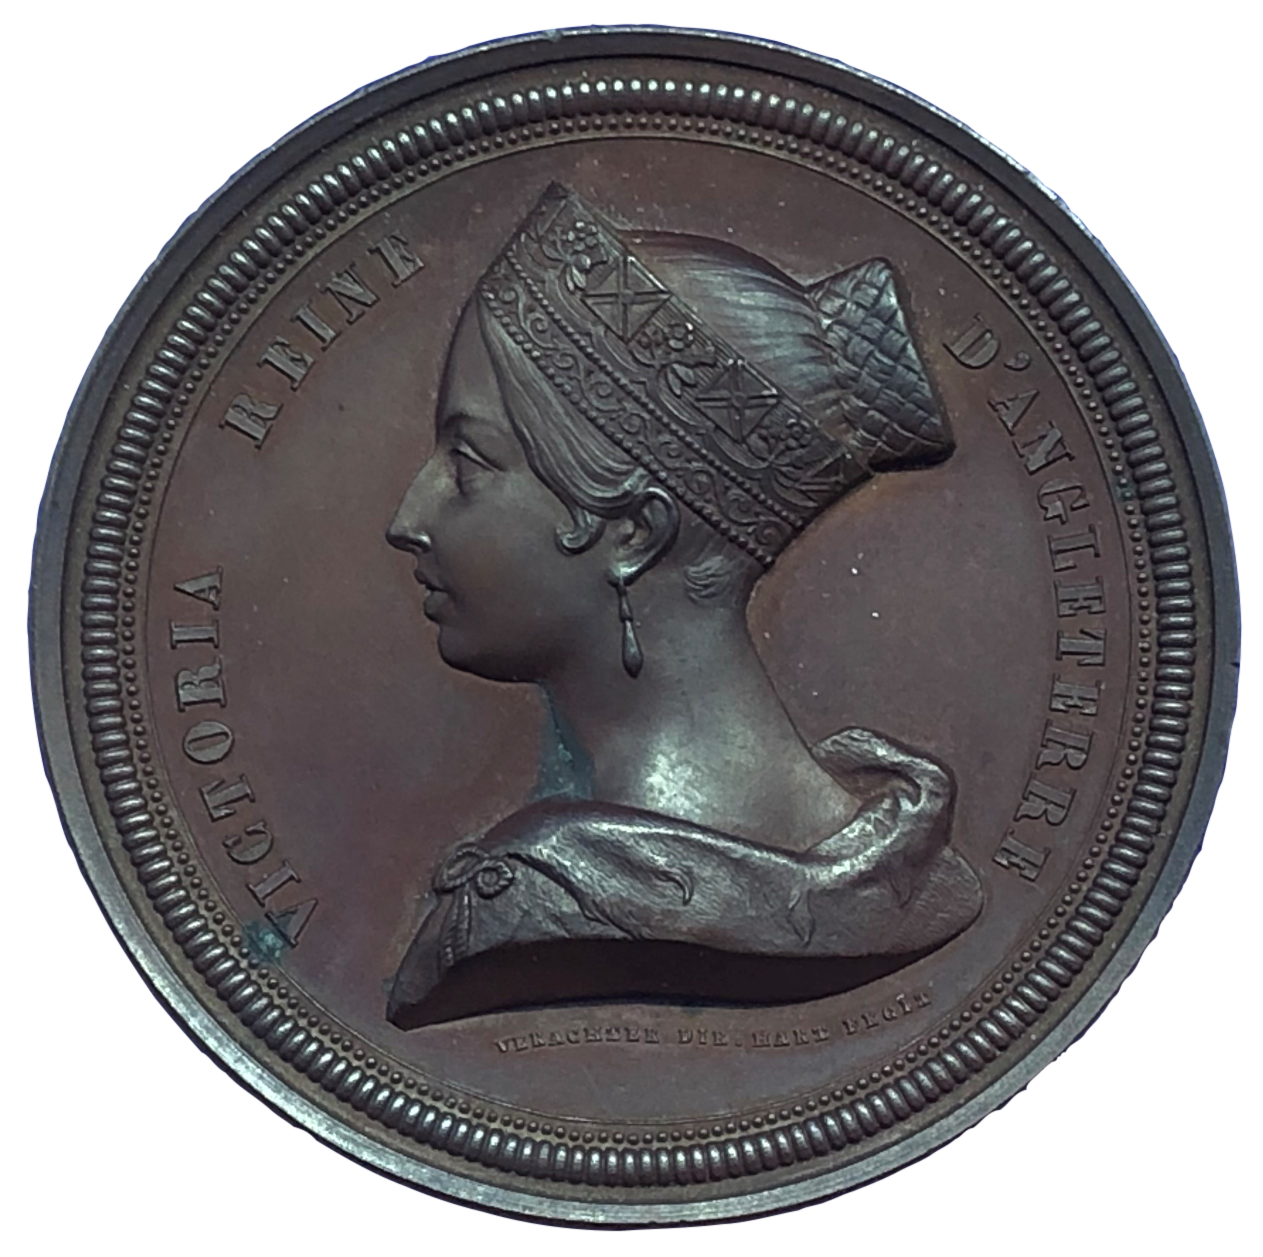 1843 Queen Victoria - Visit to Belgium Historical Medallion by V M Borrel Obverse